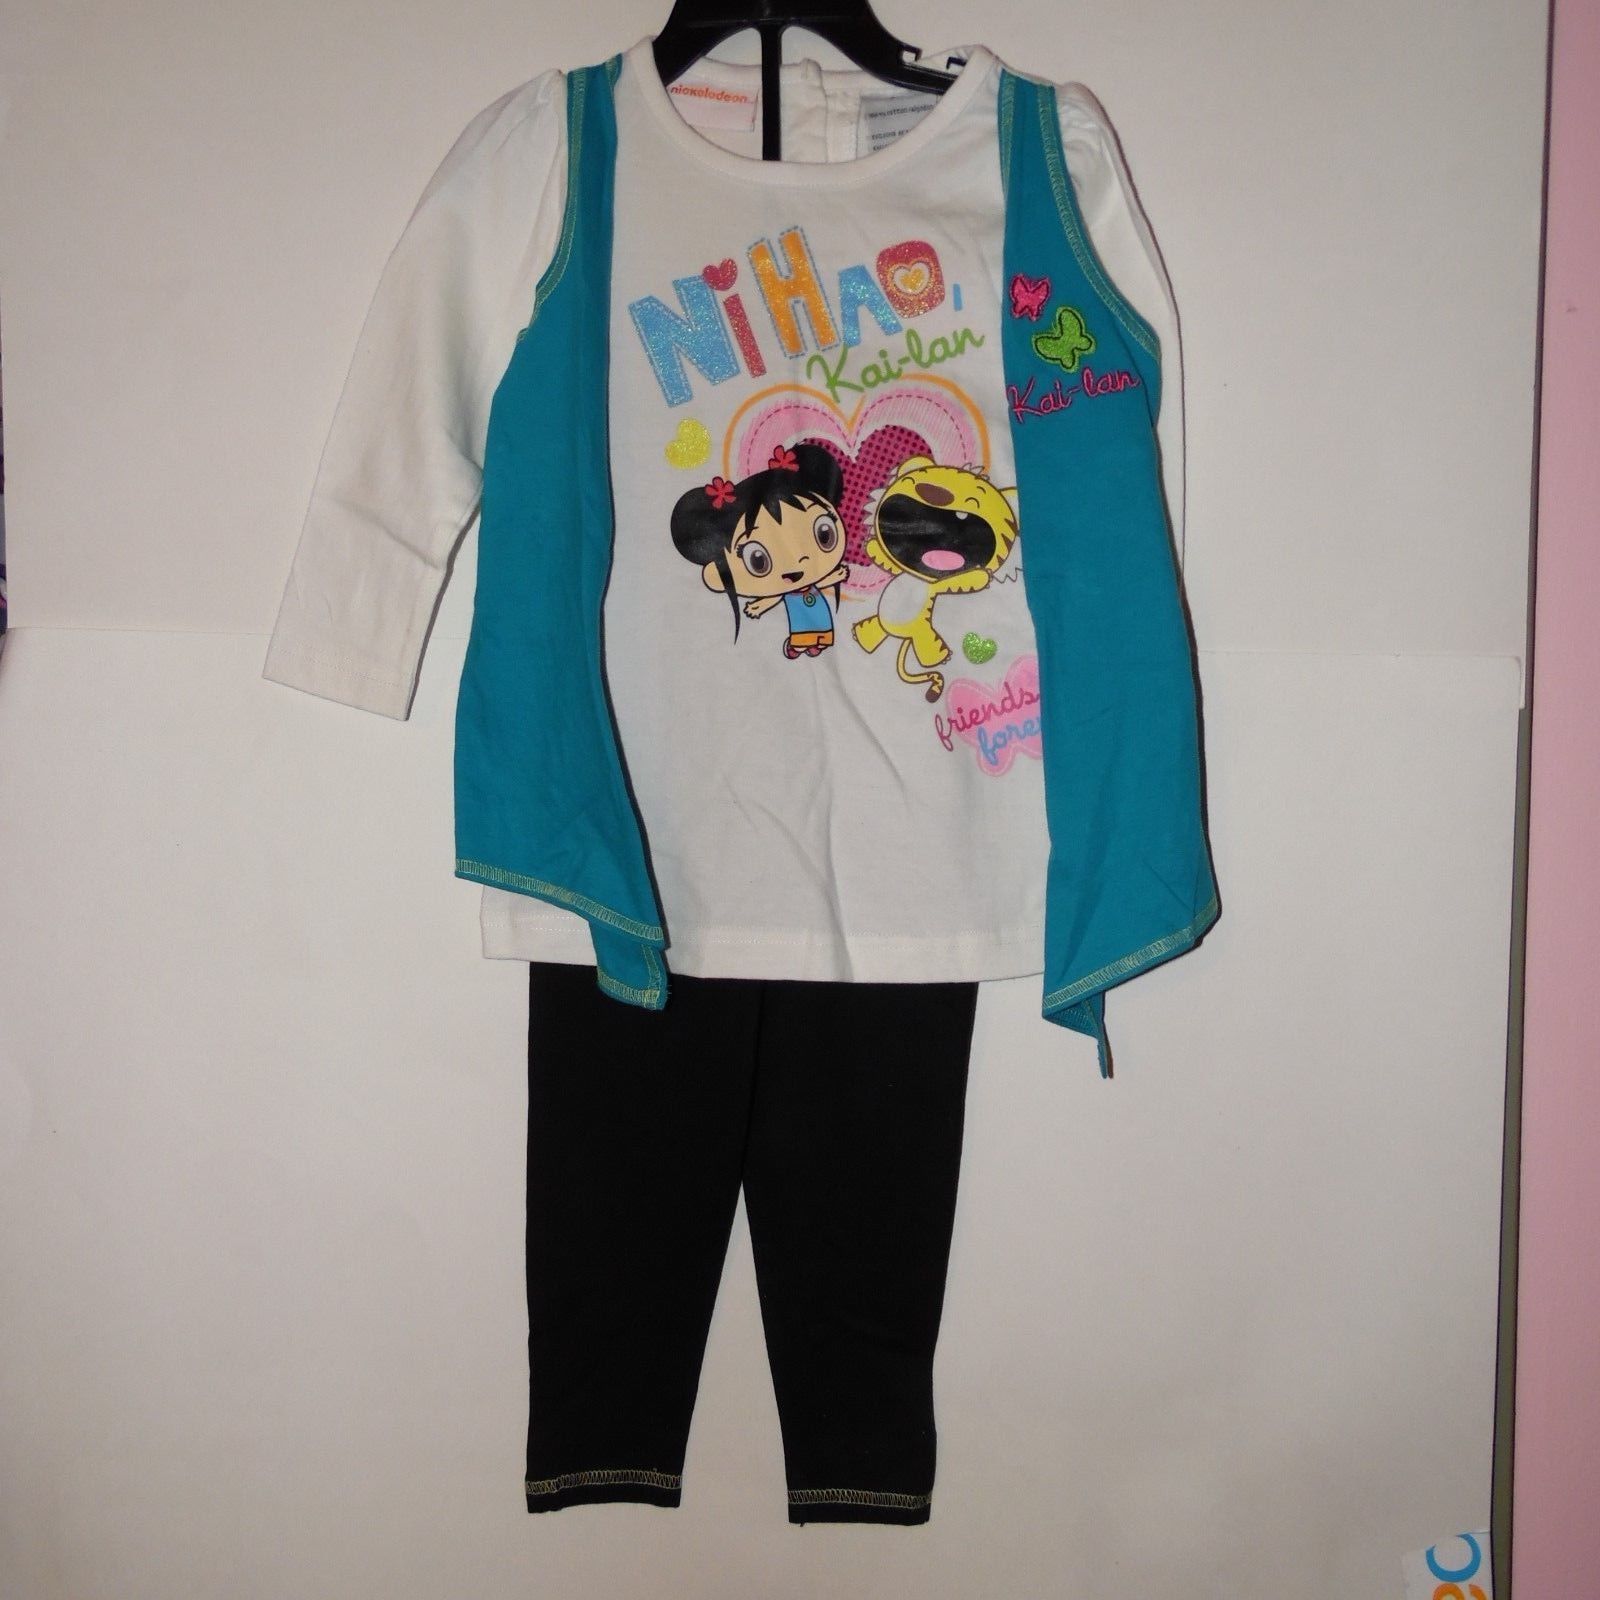 Nihao Kai-lan Toddler Girls 2 piece Pants Outfit Size-24Months NWT - $14.39